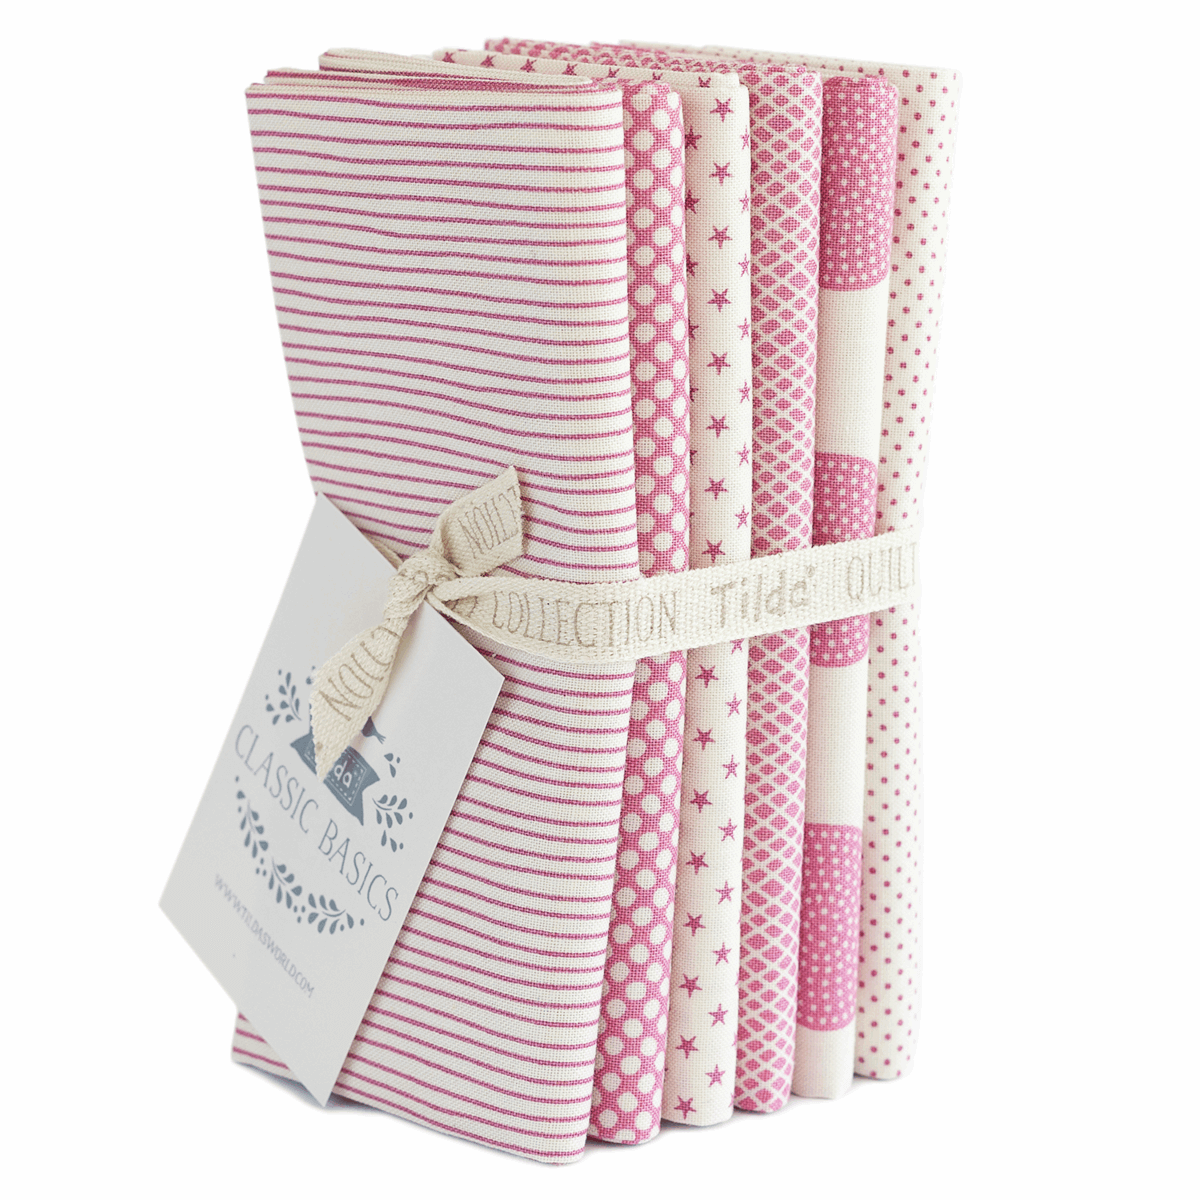 Tilda Classic Basics cotton fat quarter bundles. Grey, pink, light blue. Quilting cotton fabric.